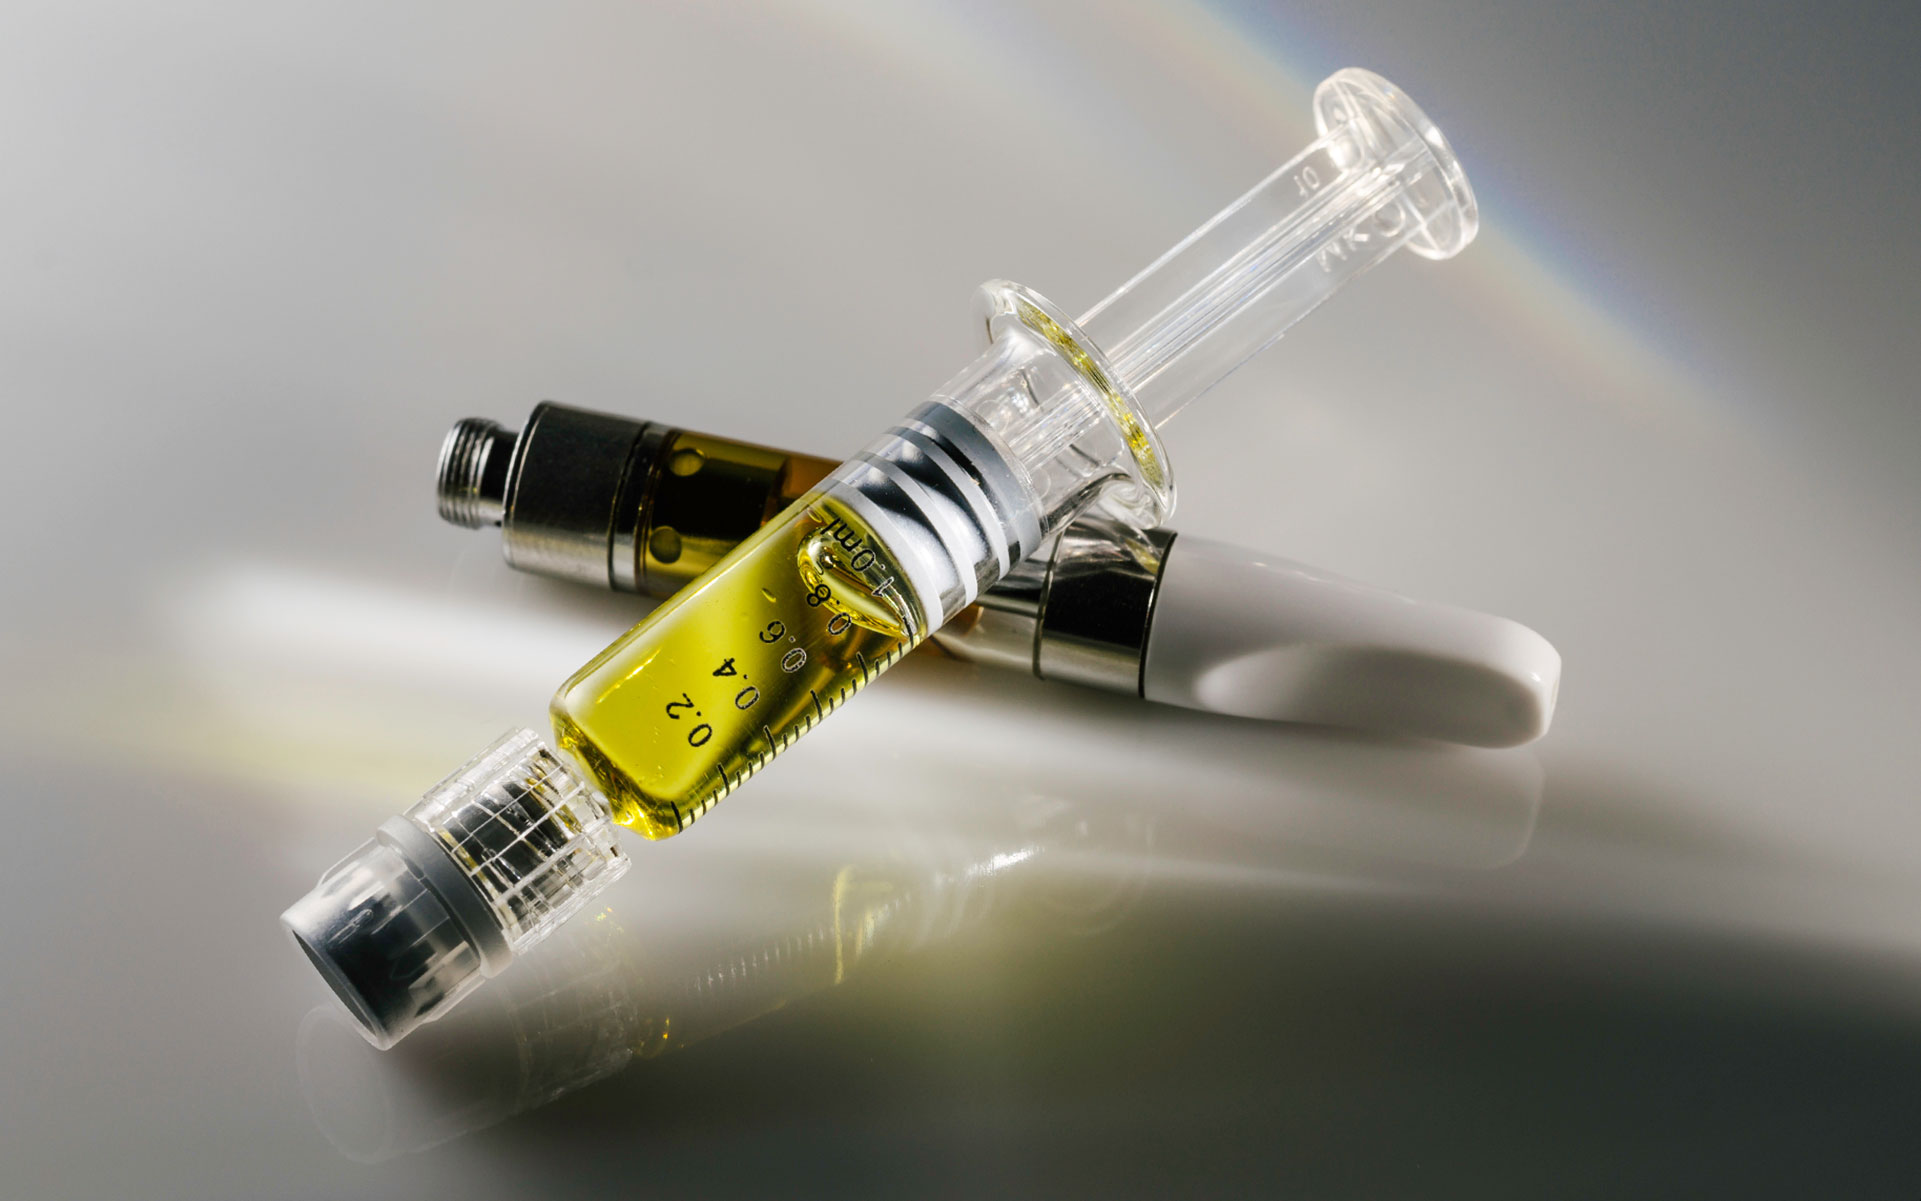 Marijuana Oil Dropper And Vape Pen On White Backgorund Stock Photo -  Download Image Now - iStock